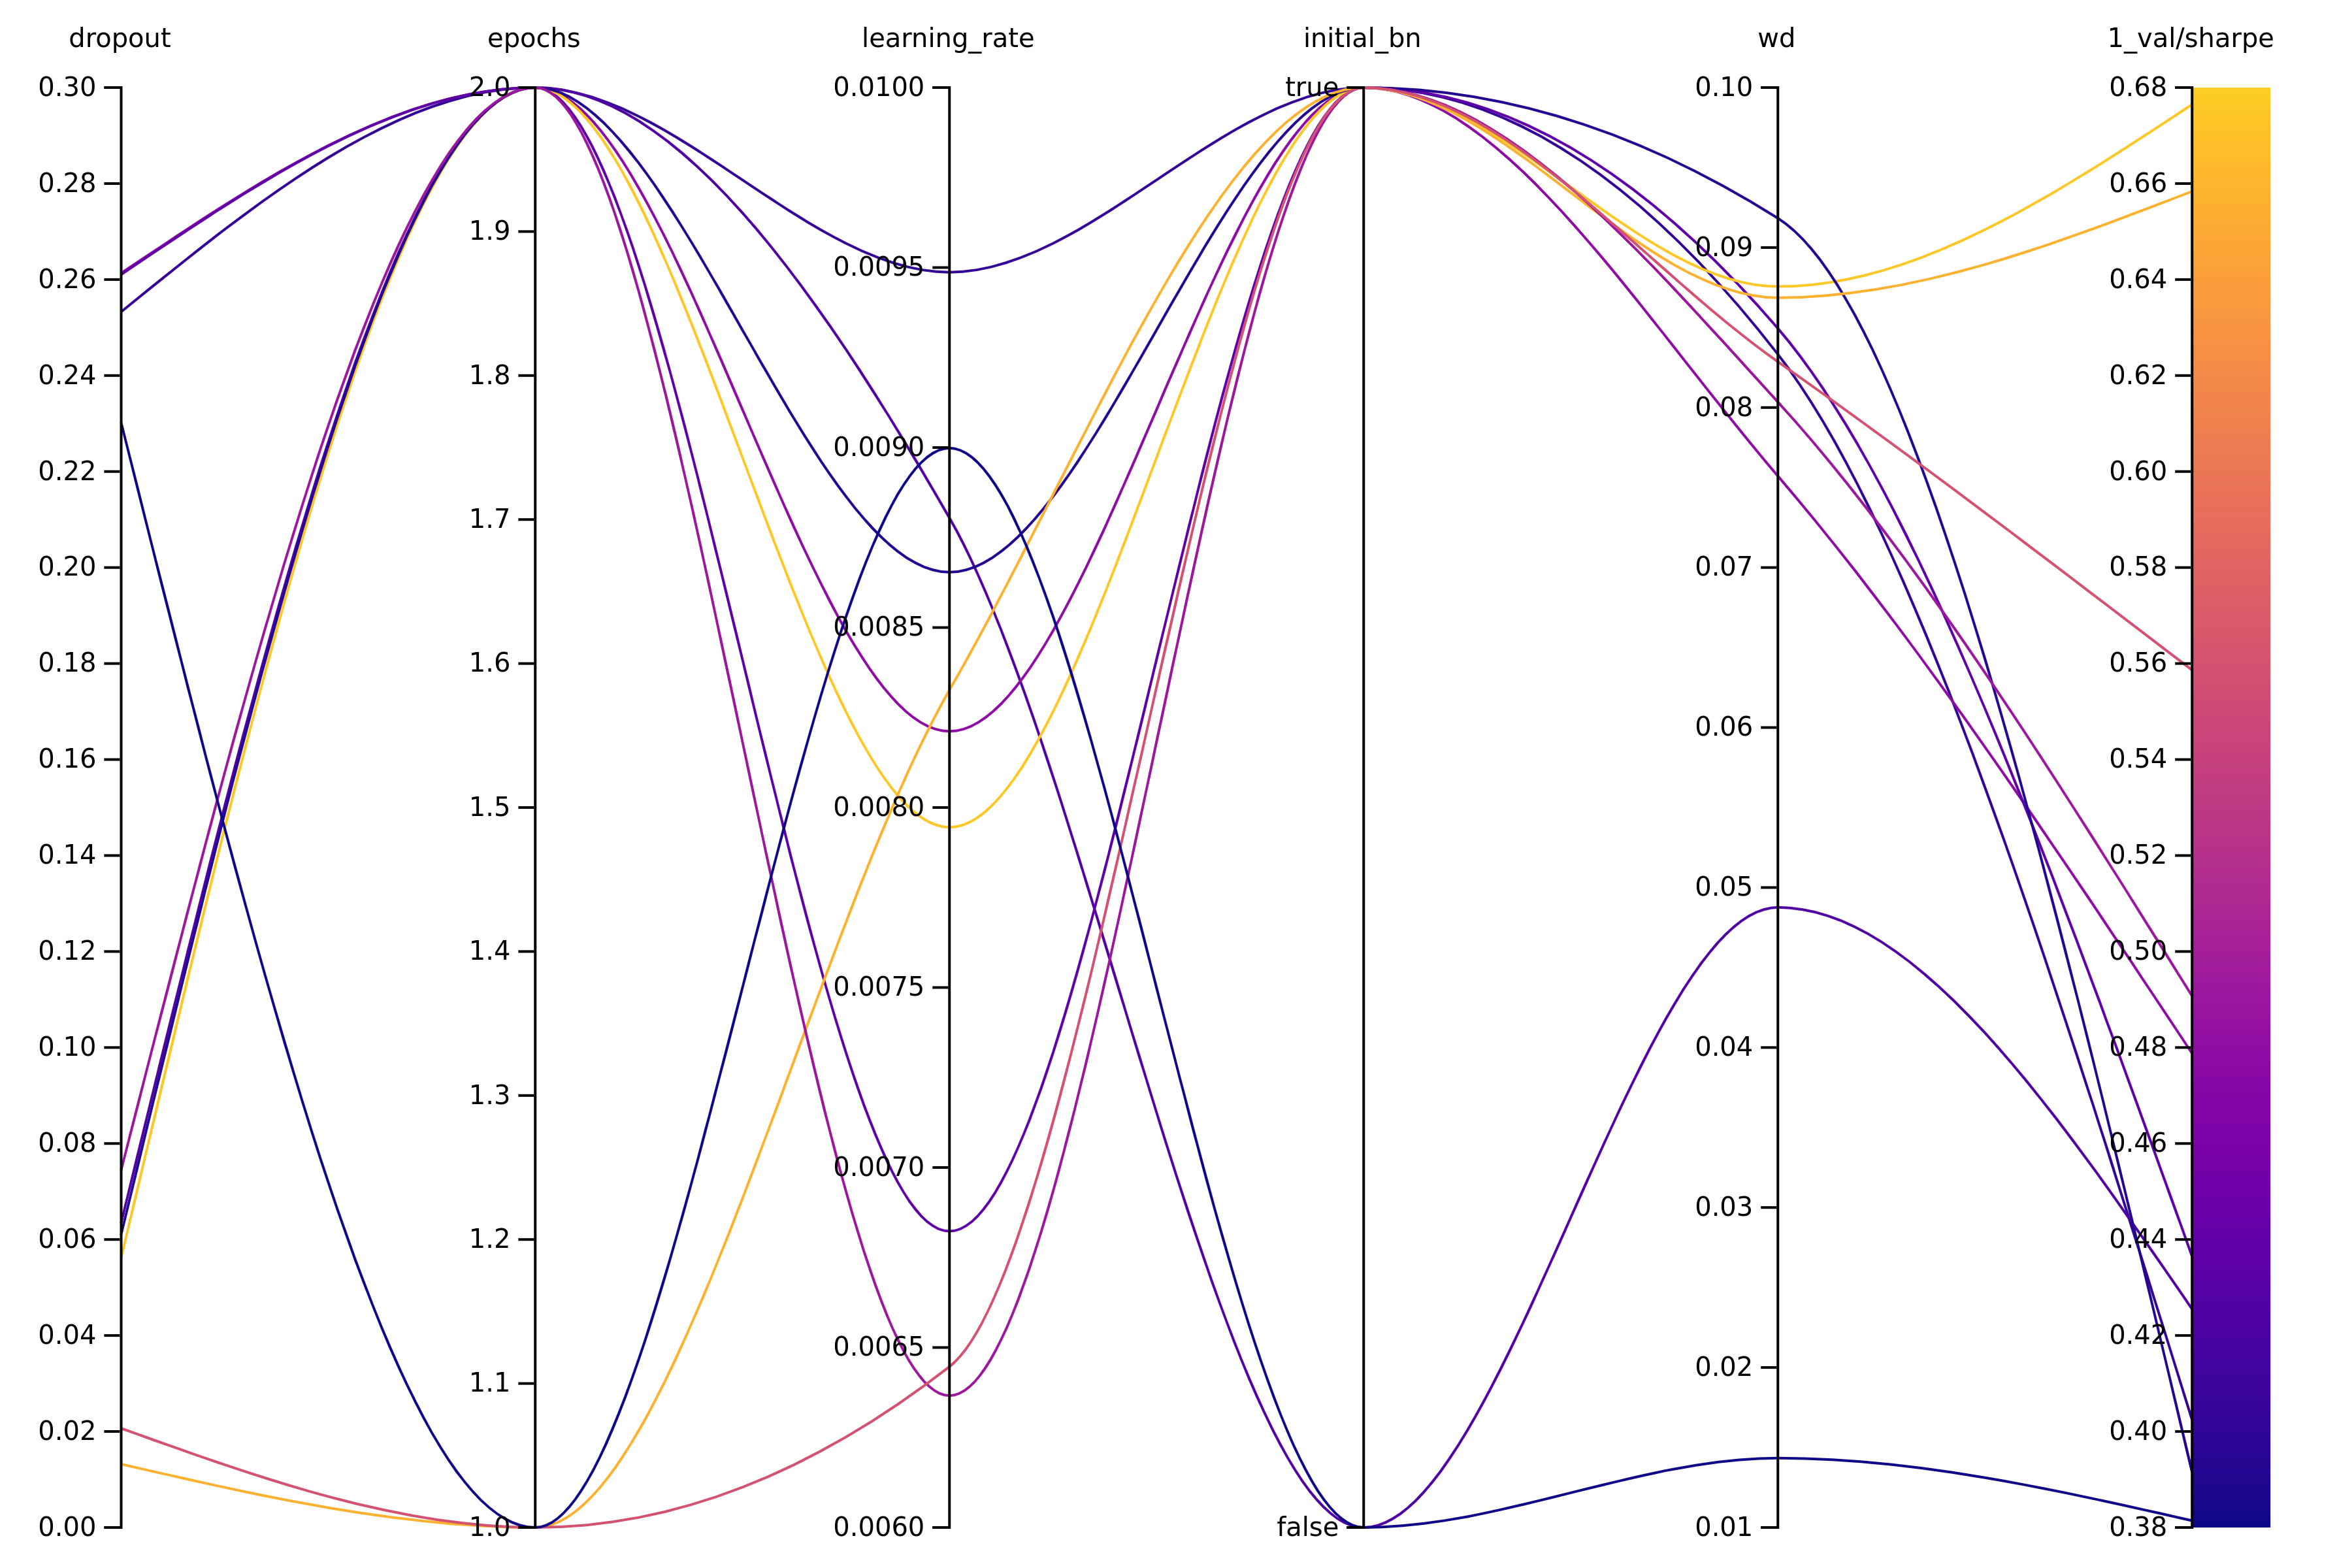 Parallel coordinates plot from wandb